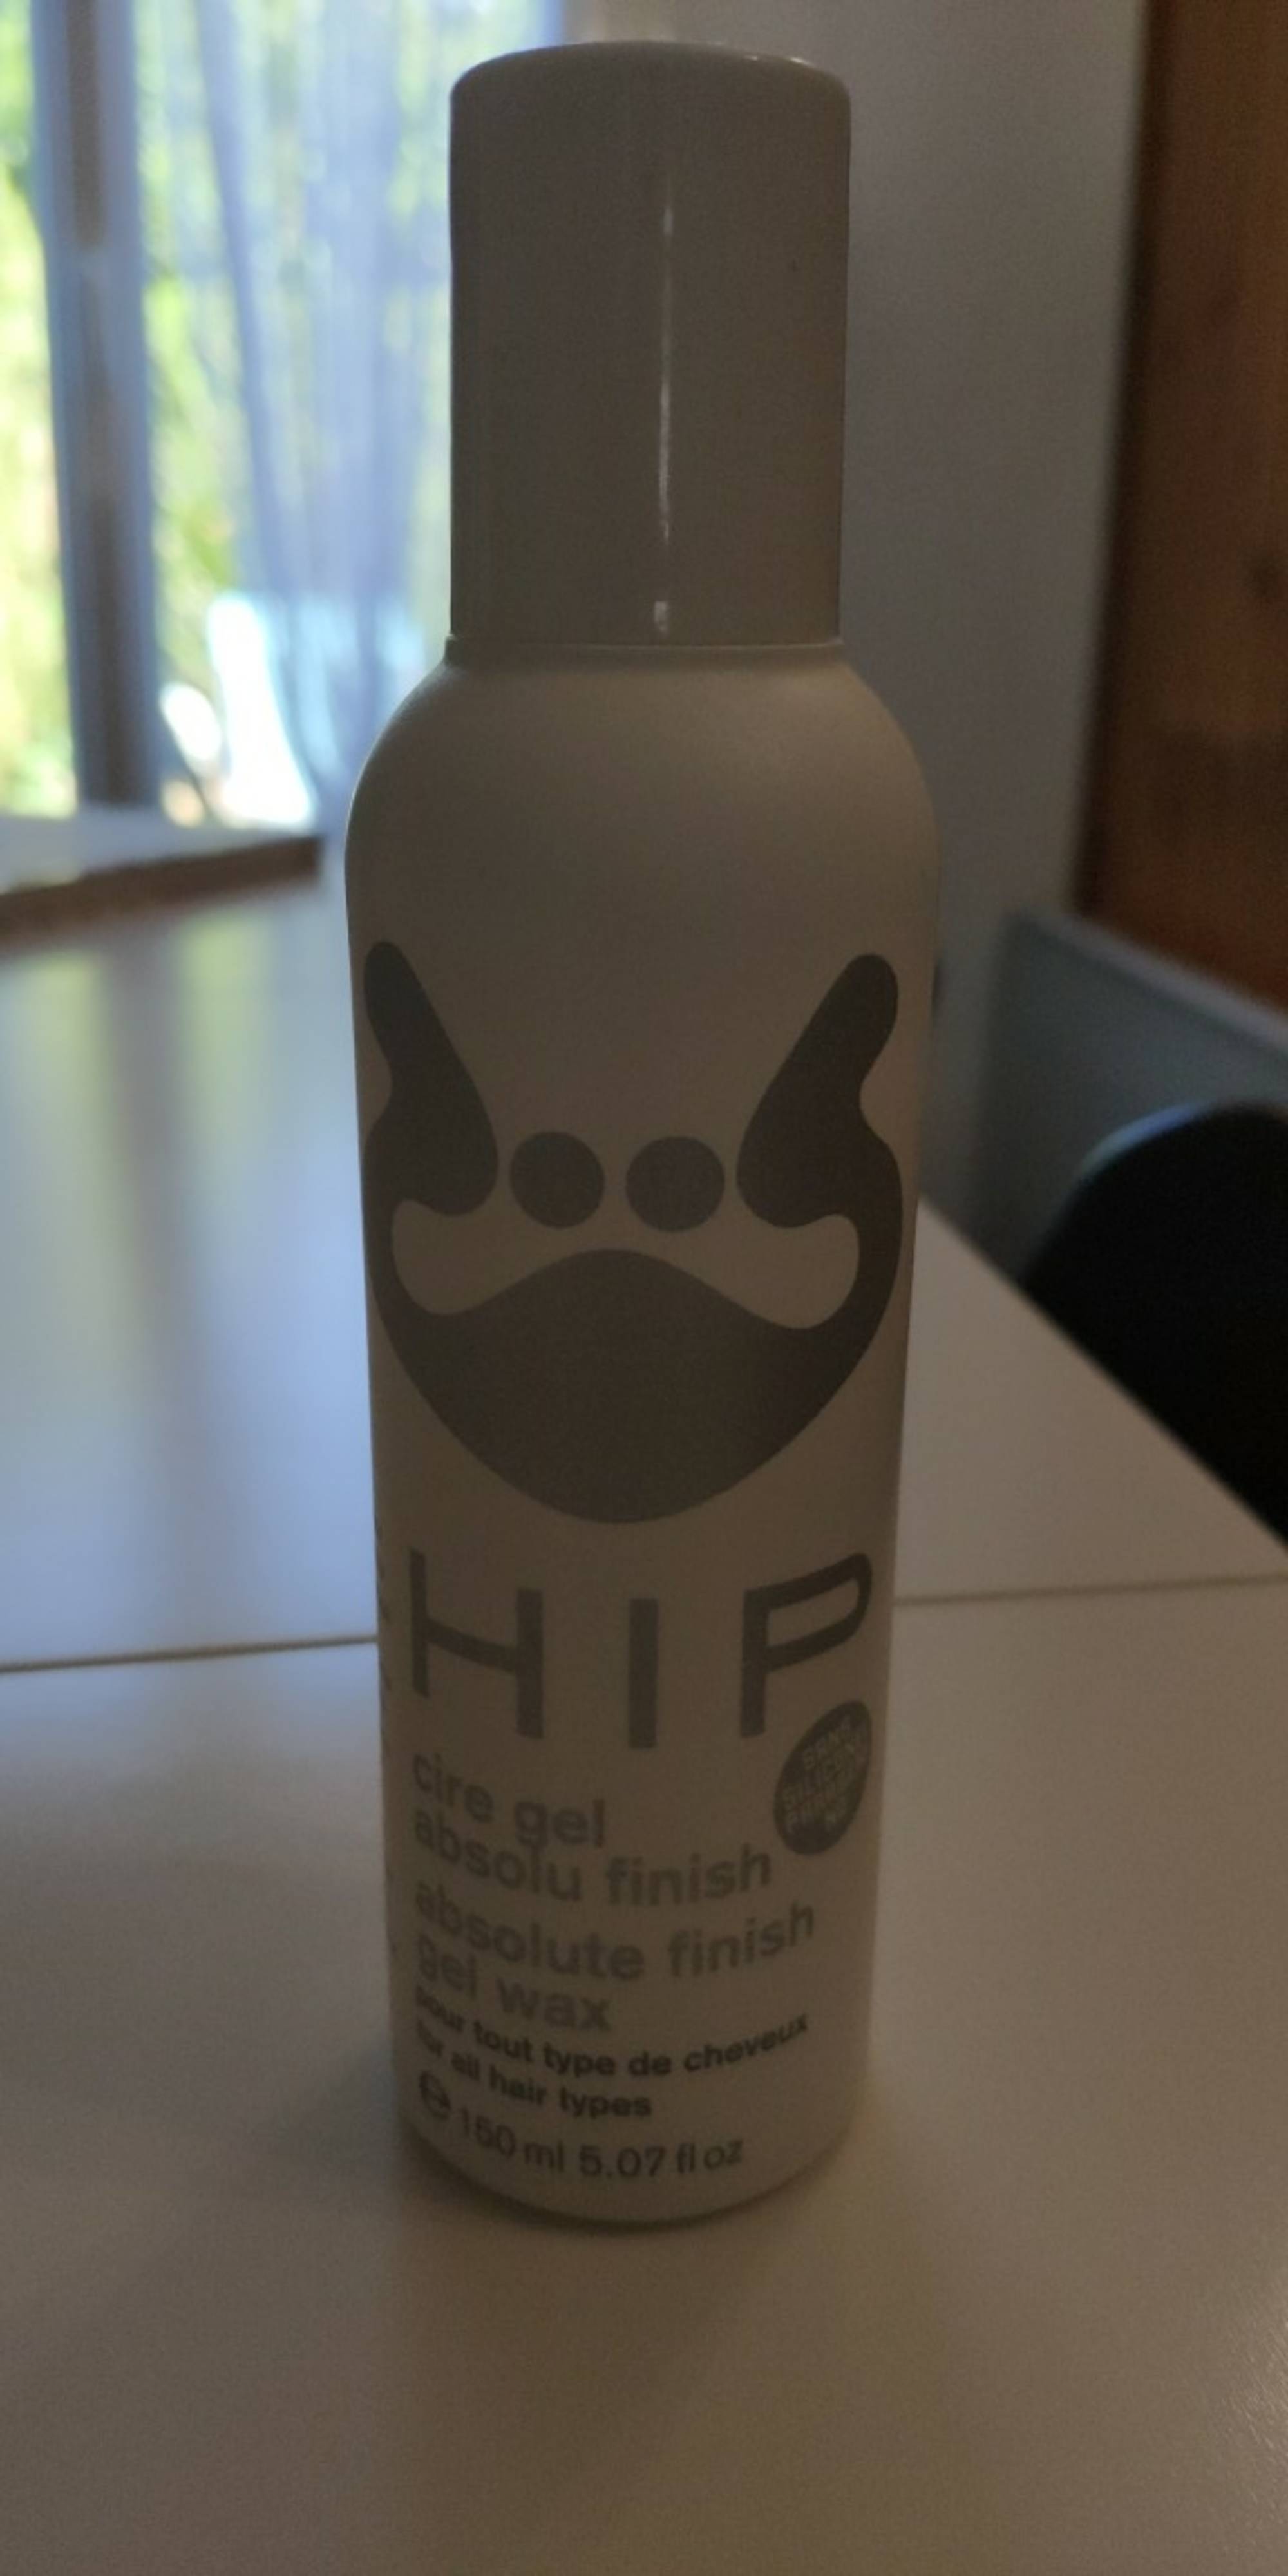 HIP - Cire gel absolu finish 